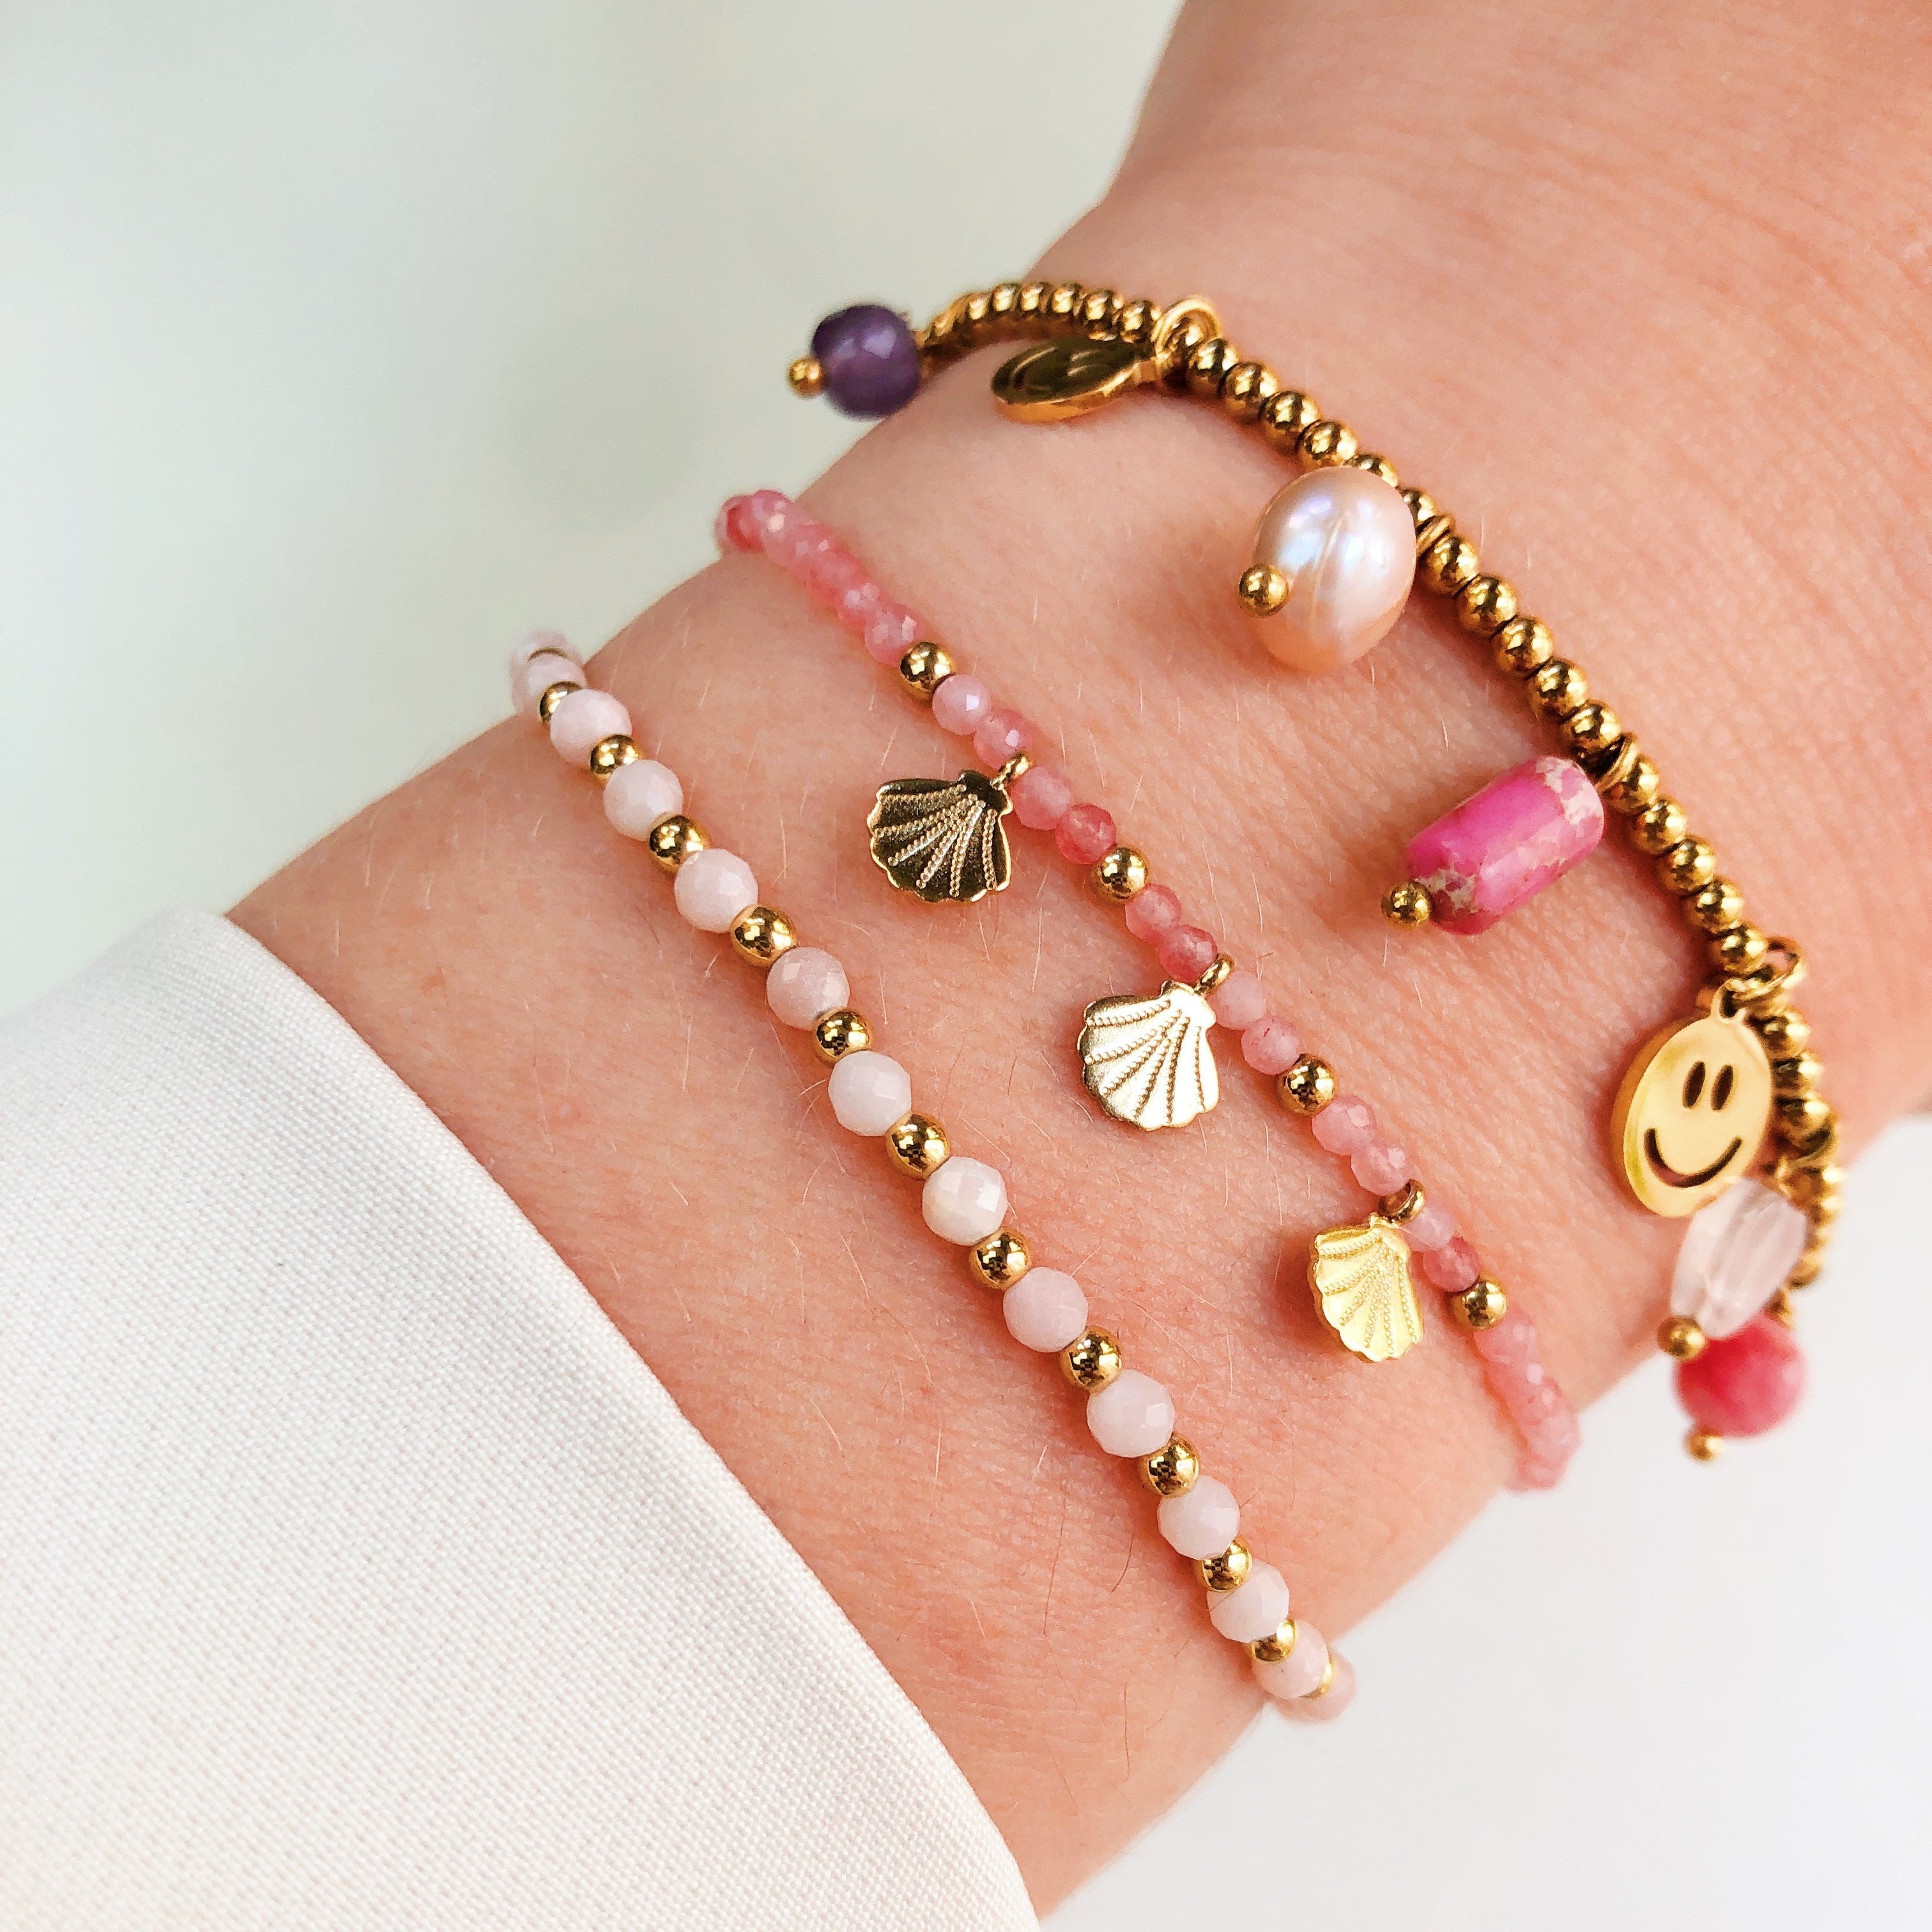 Bracelet colorful seashells pink